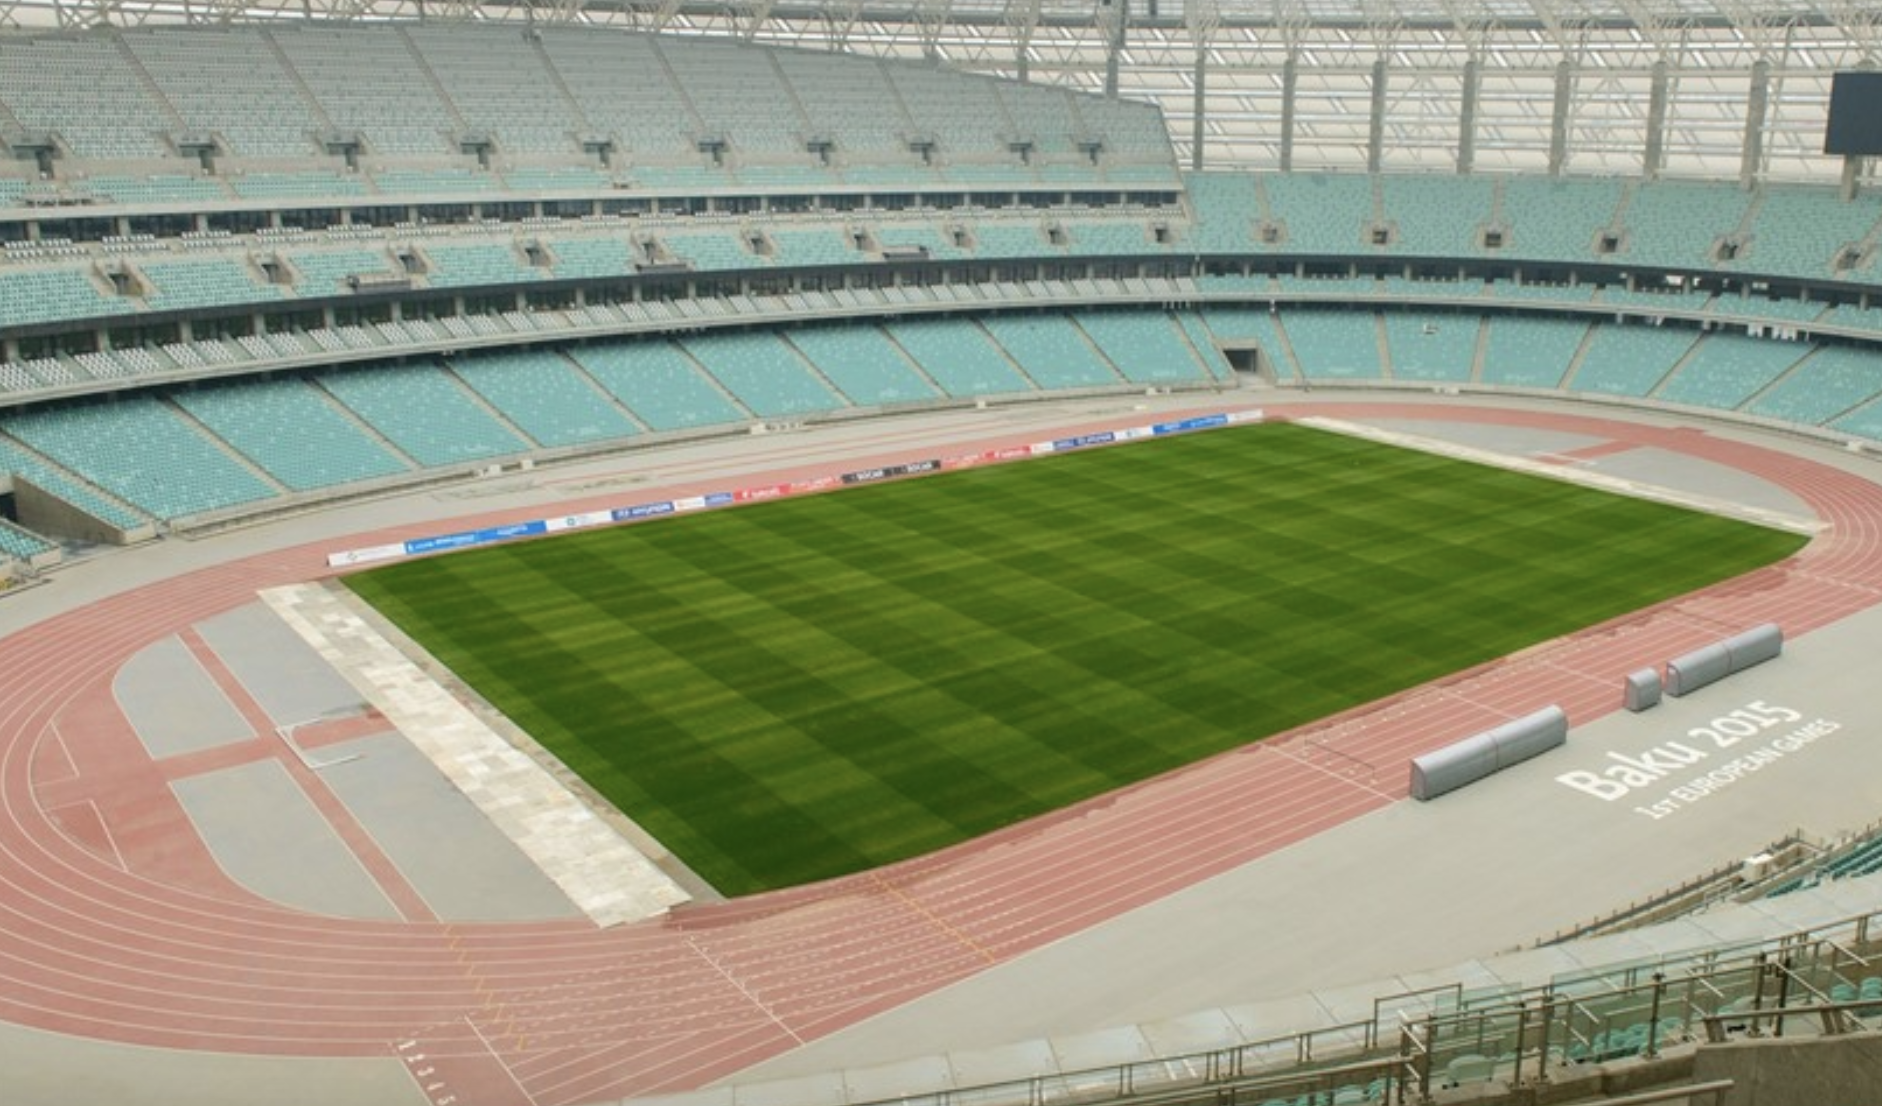 europa league final stadium 2019